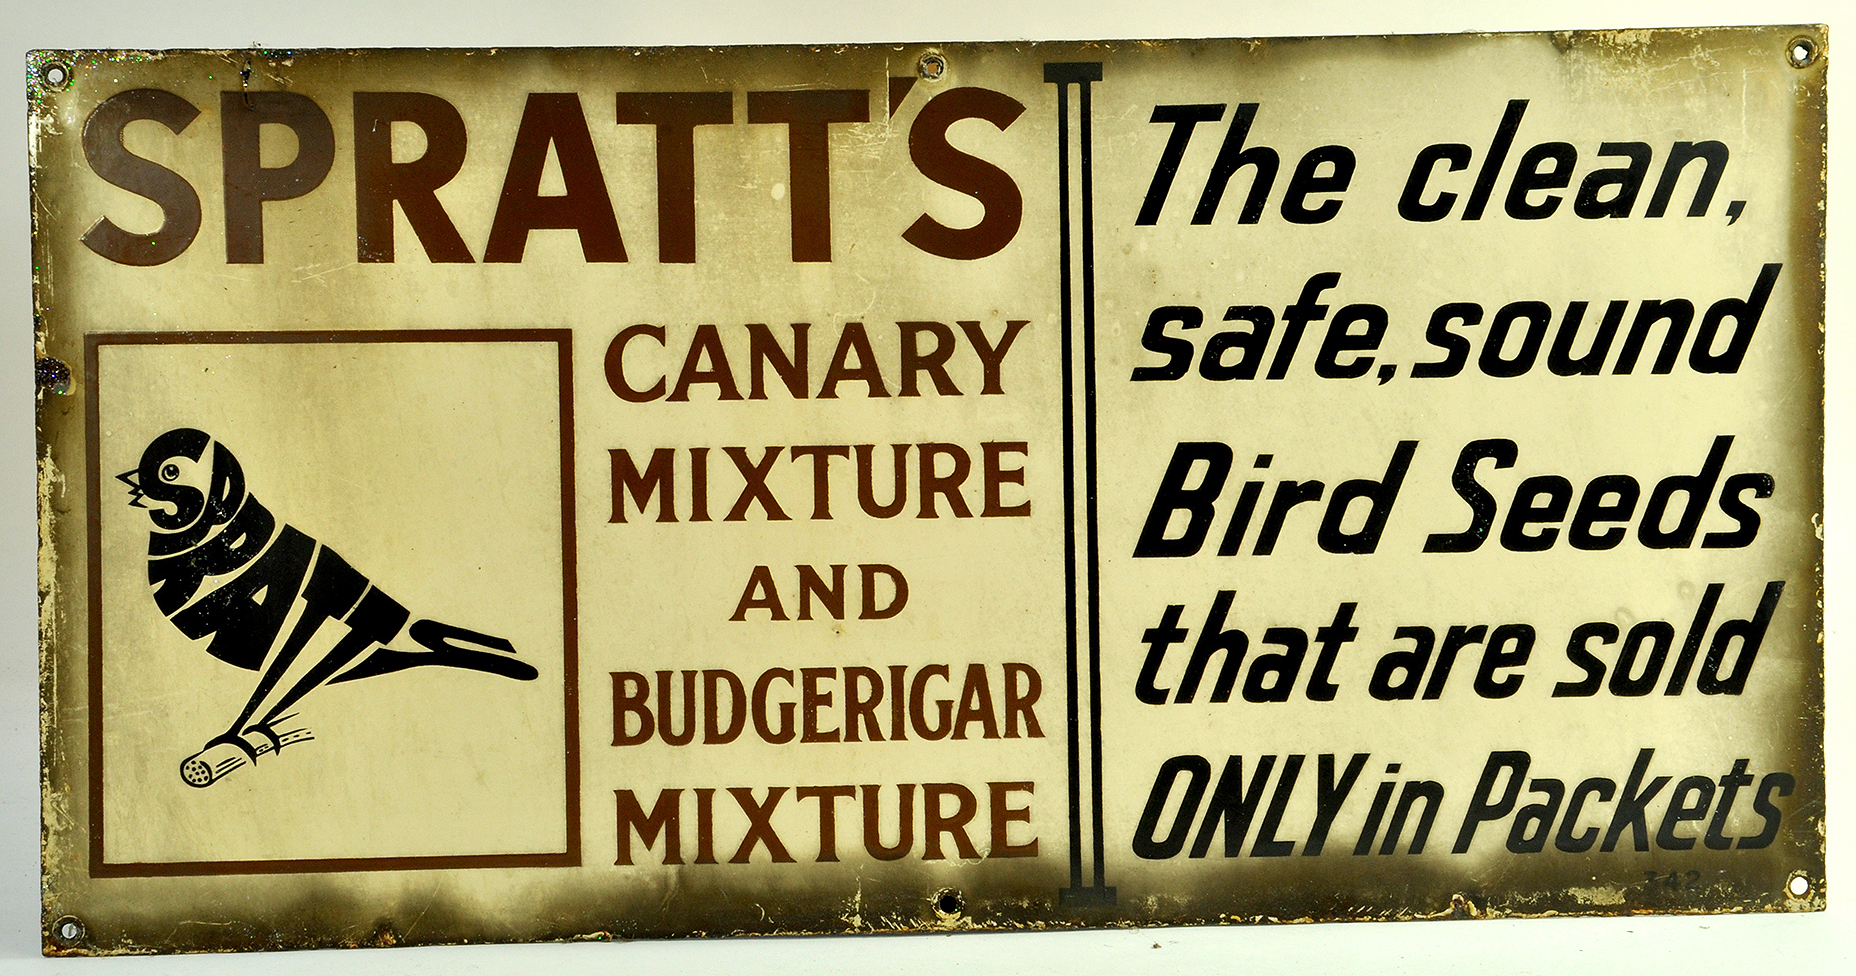 An original Spratts Antique Enamel Advertising Sign for Spratts Canary / Budgerigar Mixture. 1940's.